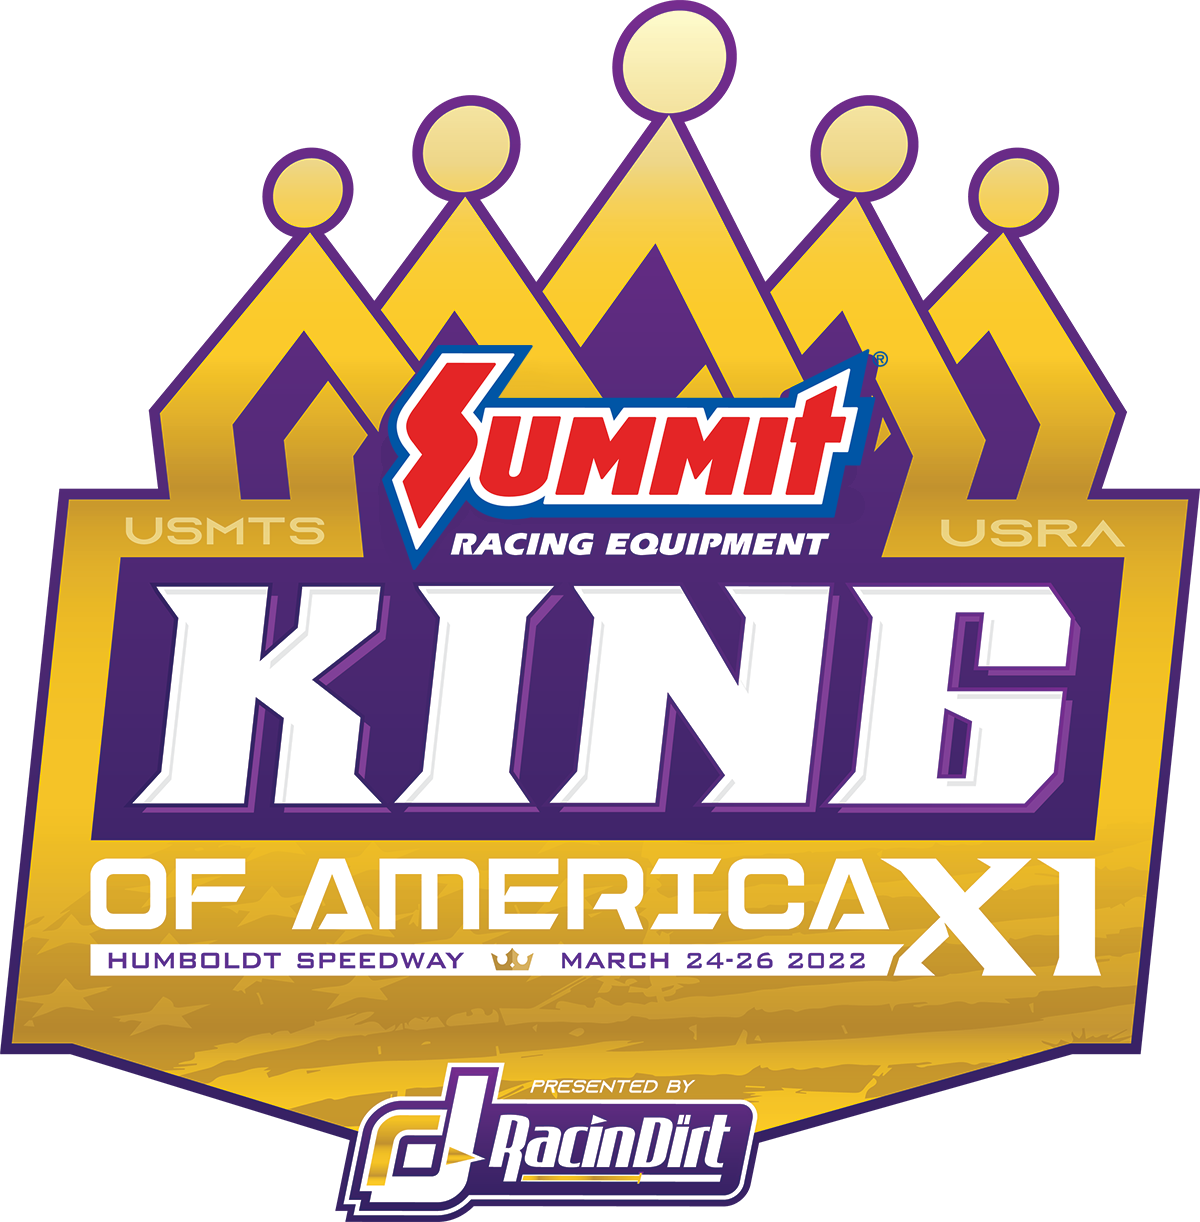 Summit USMTS King of America XI presented by RacinDirt